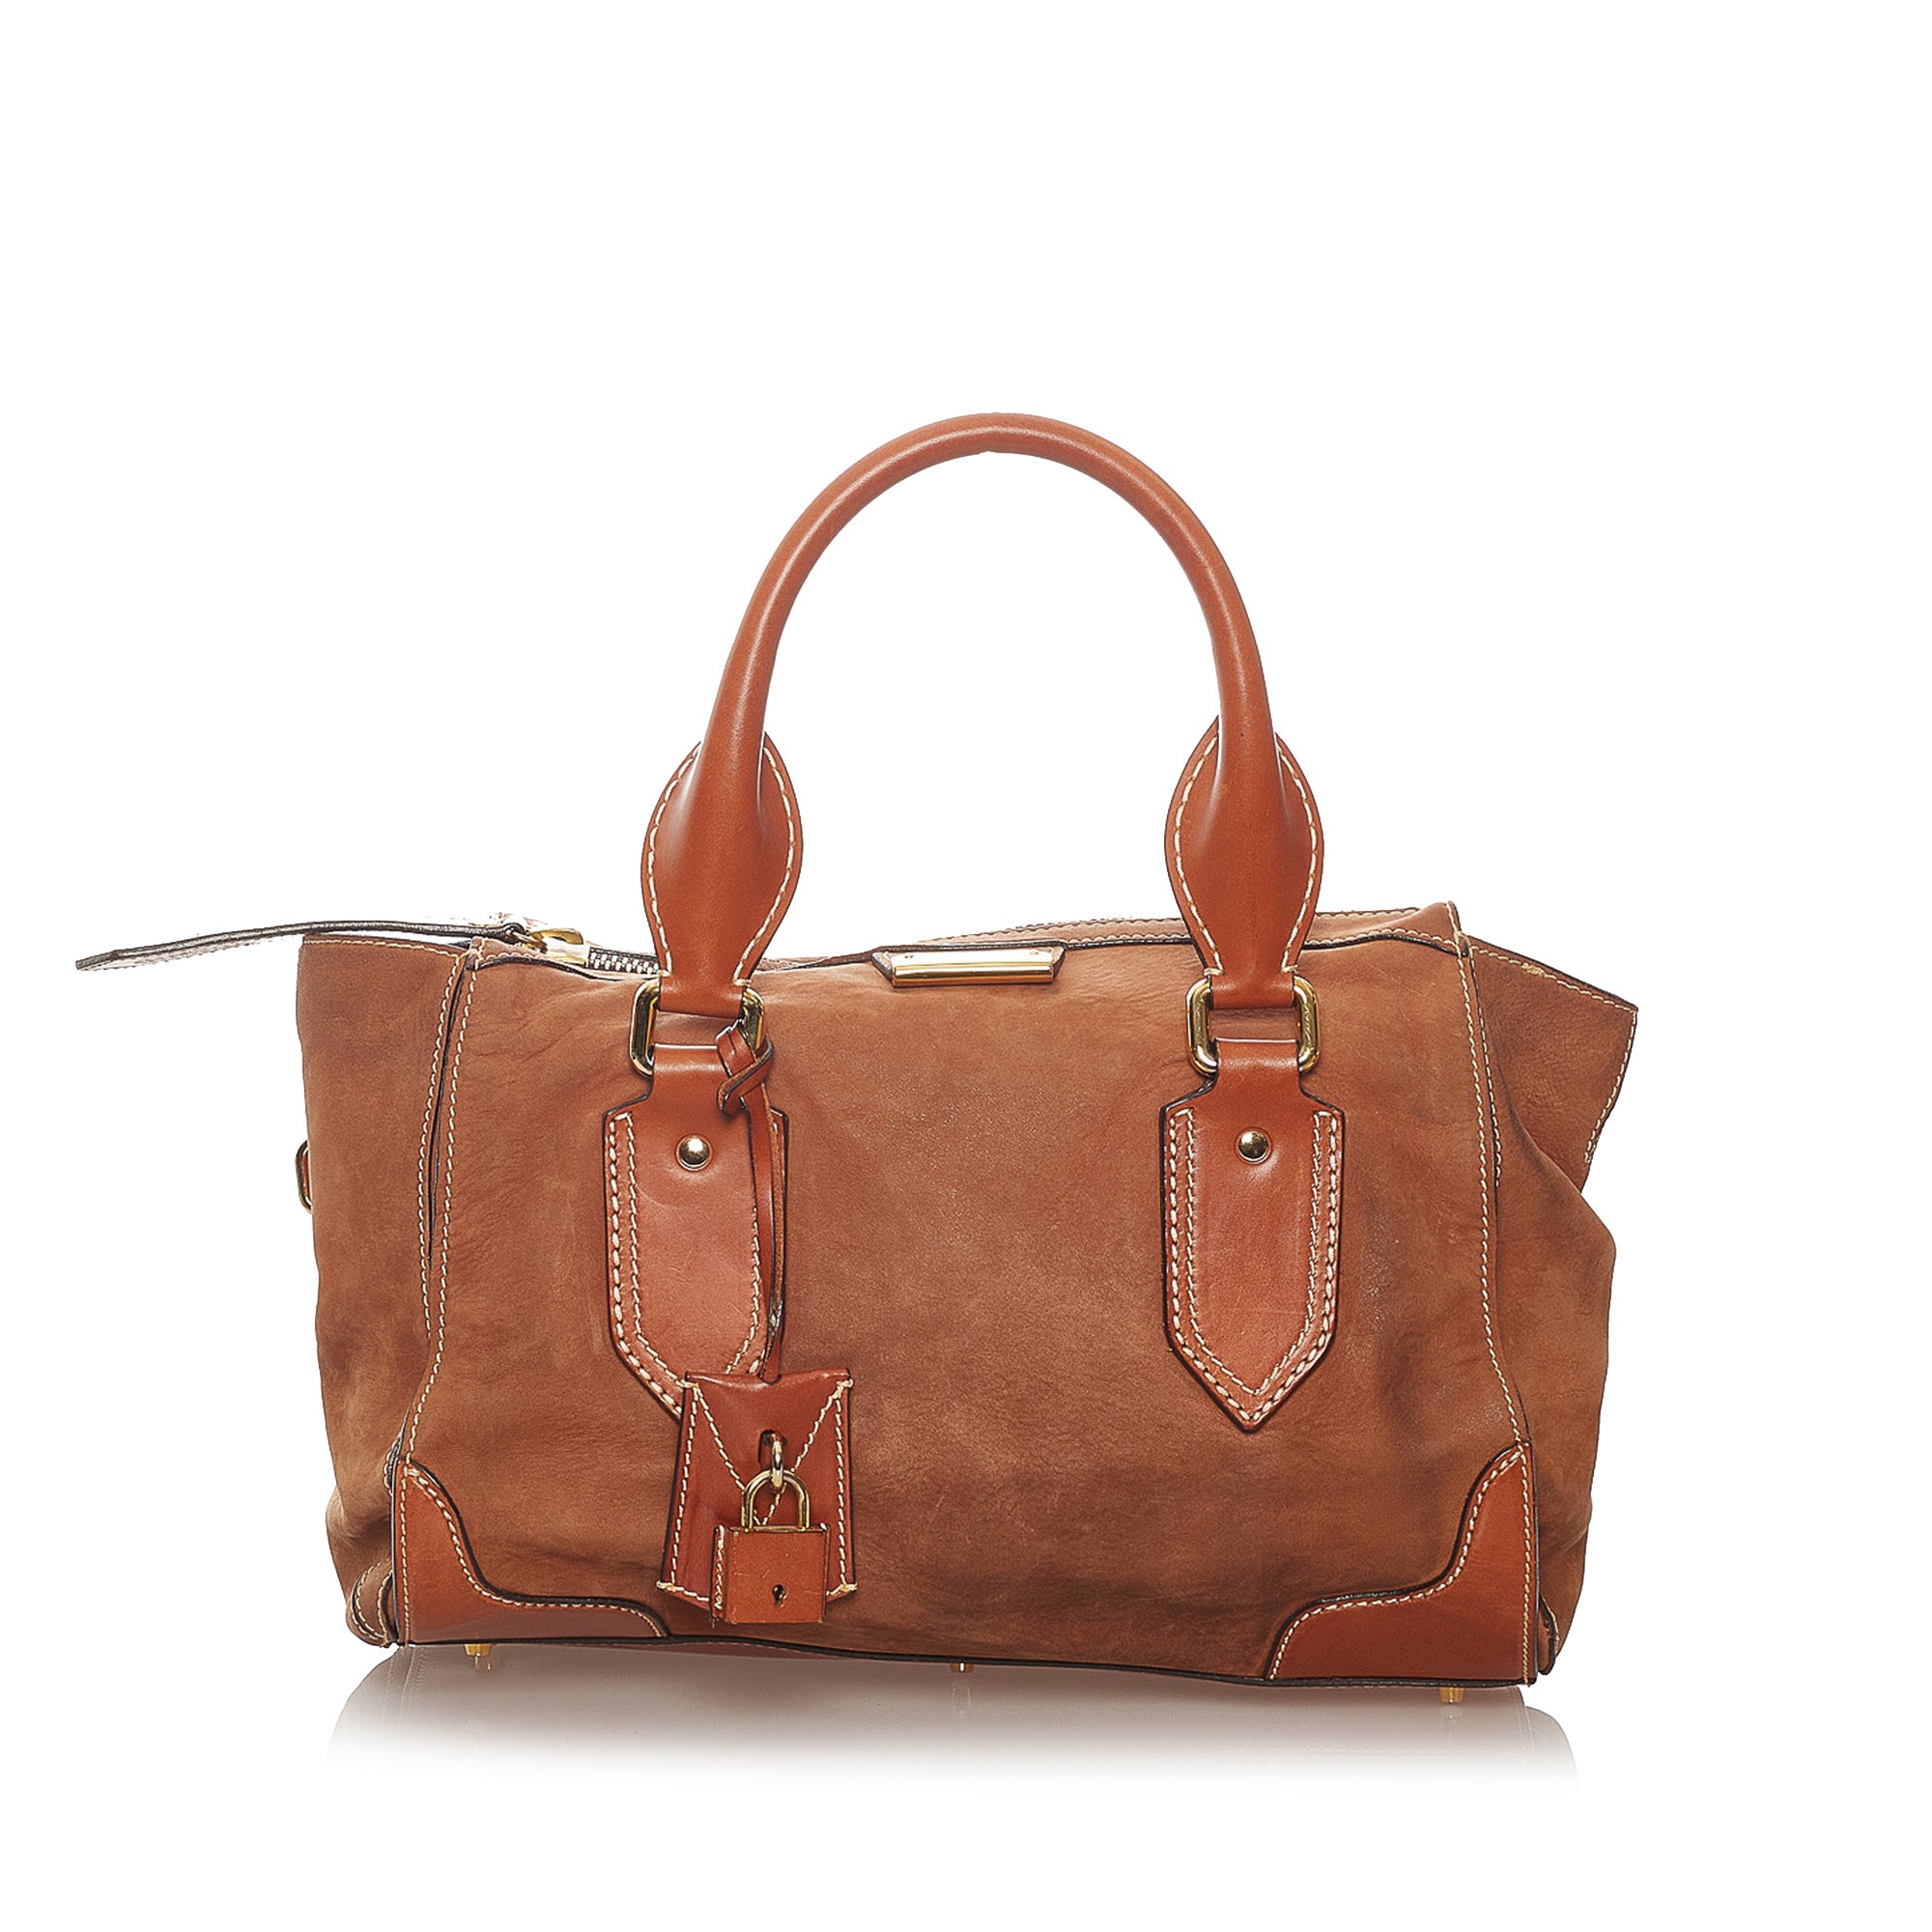 Burberry Suede Handbag | The Vintage Bag Collection